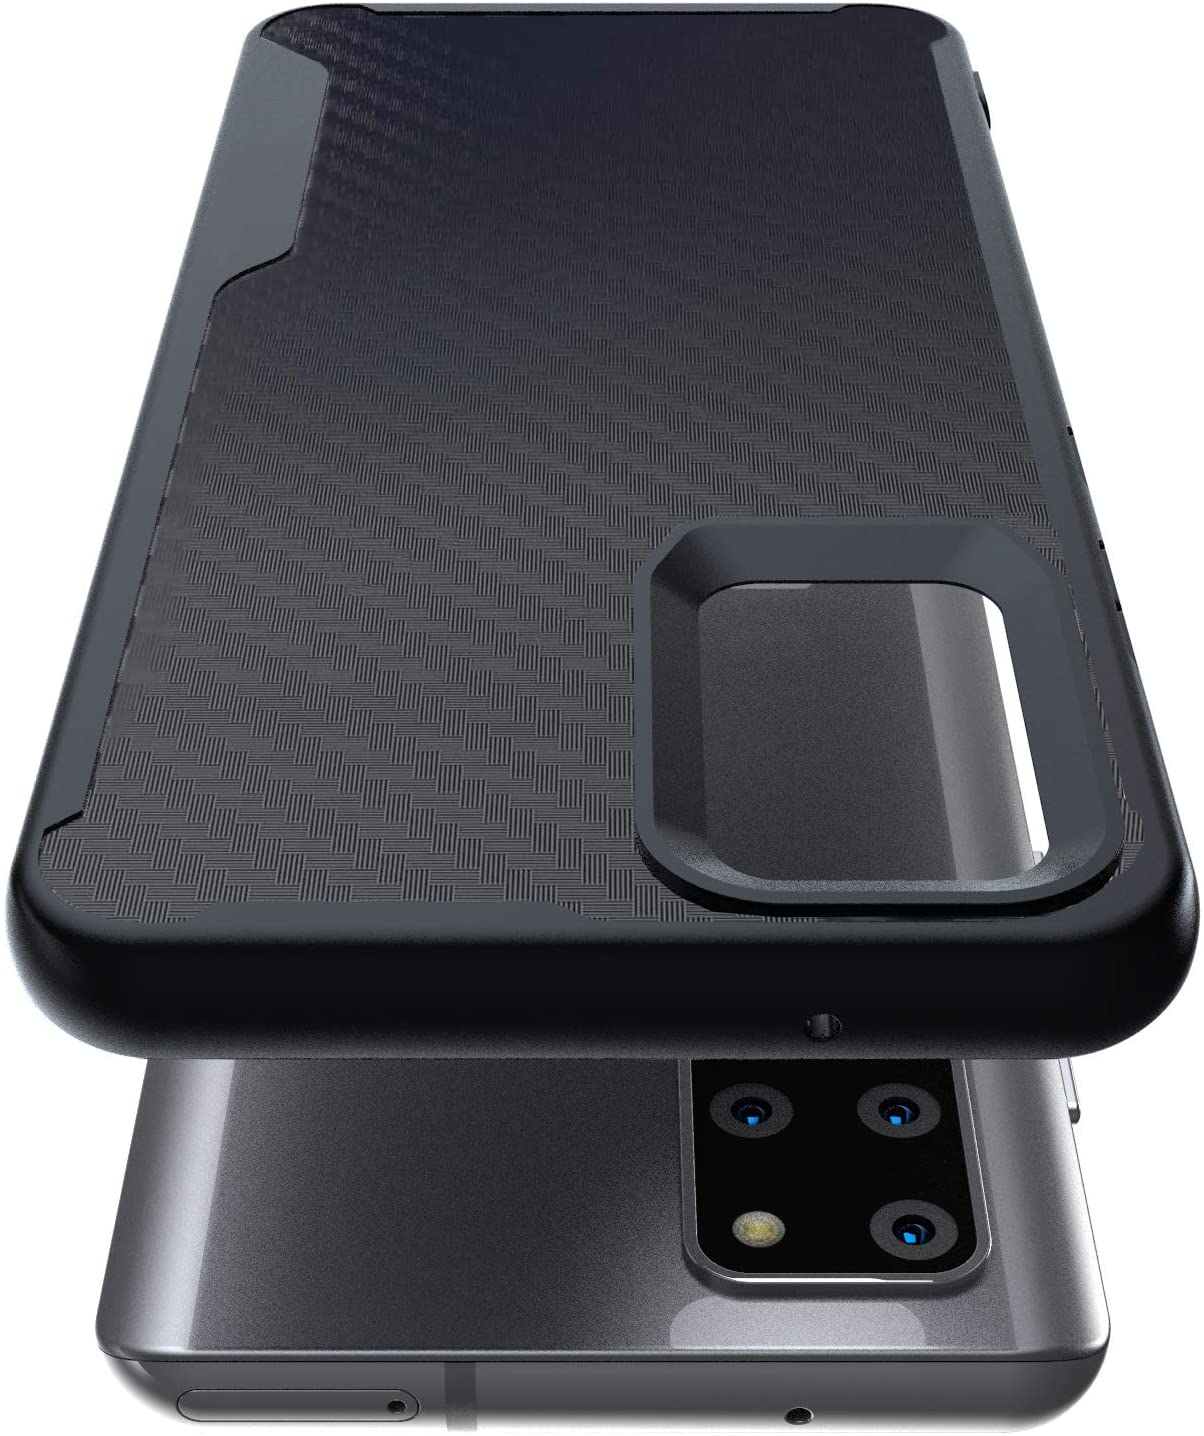 Samsung Galaxy S20 Plus Kitoo Carbon Fiber Pattern Case Black